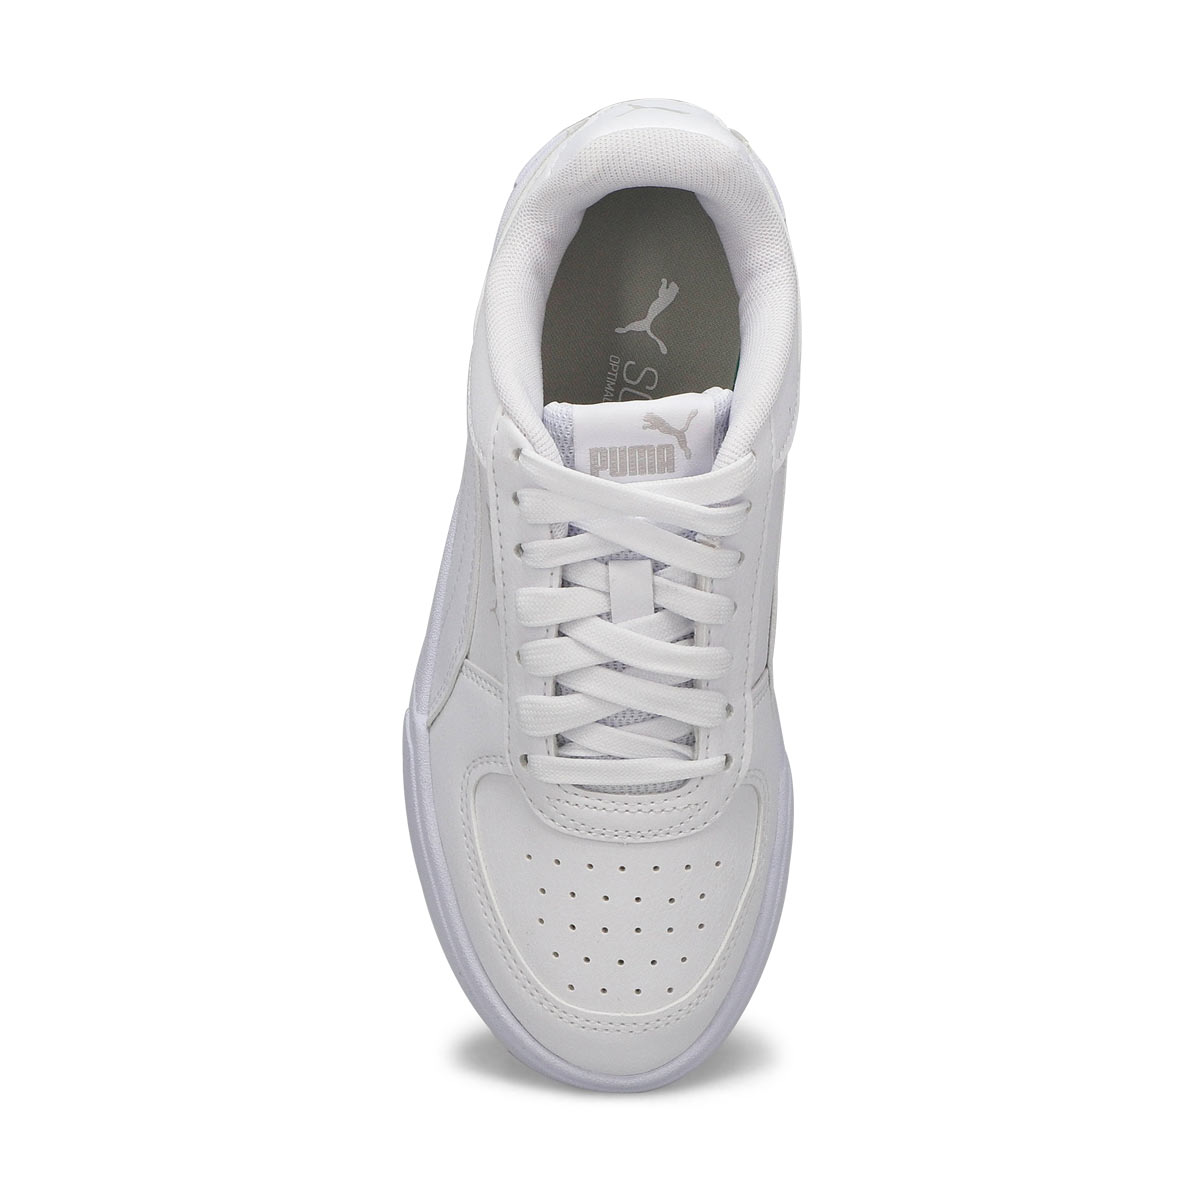 Puma Kid's Caven Jr Sneaker - White/Grey | SoftMoc.com